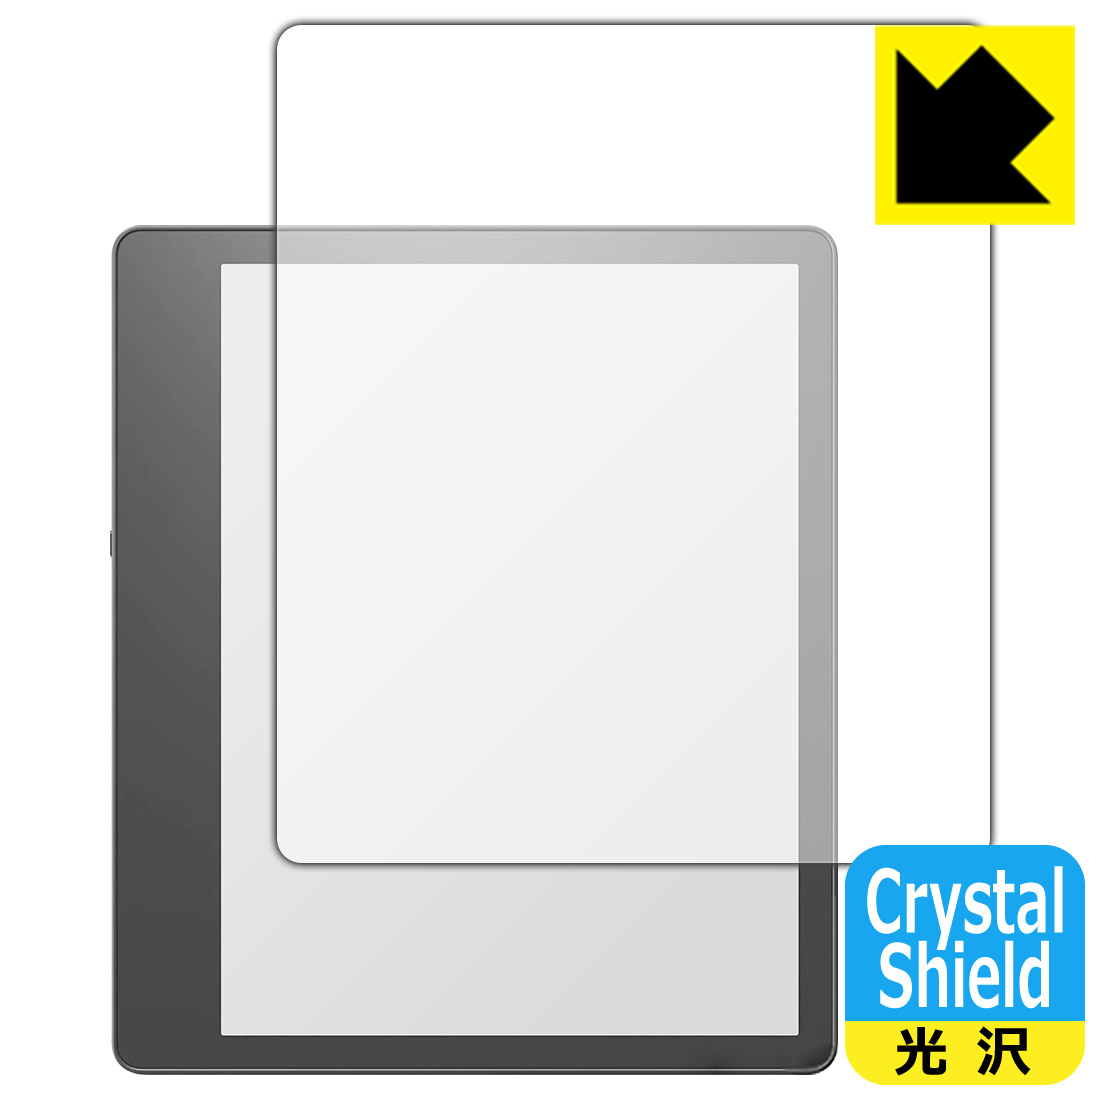 Crystal Shield【光沢】保護フィルム...の商品画像